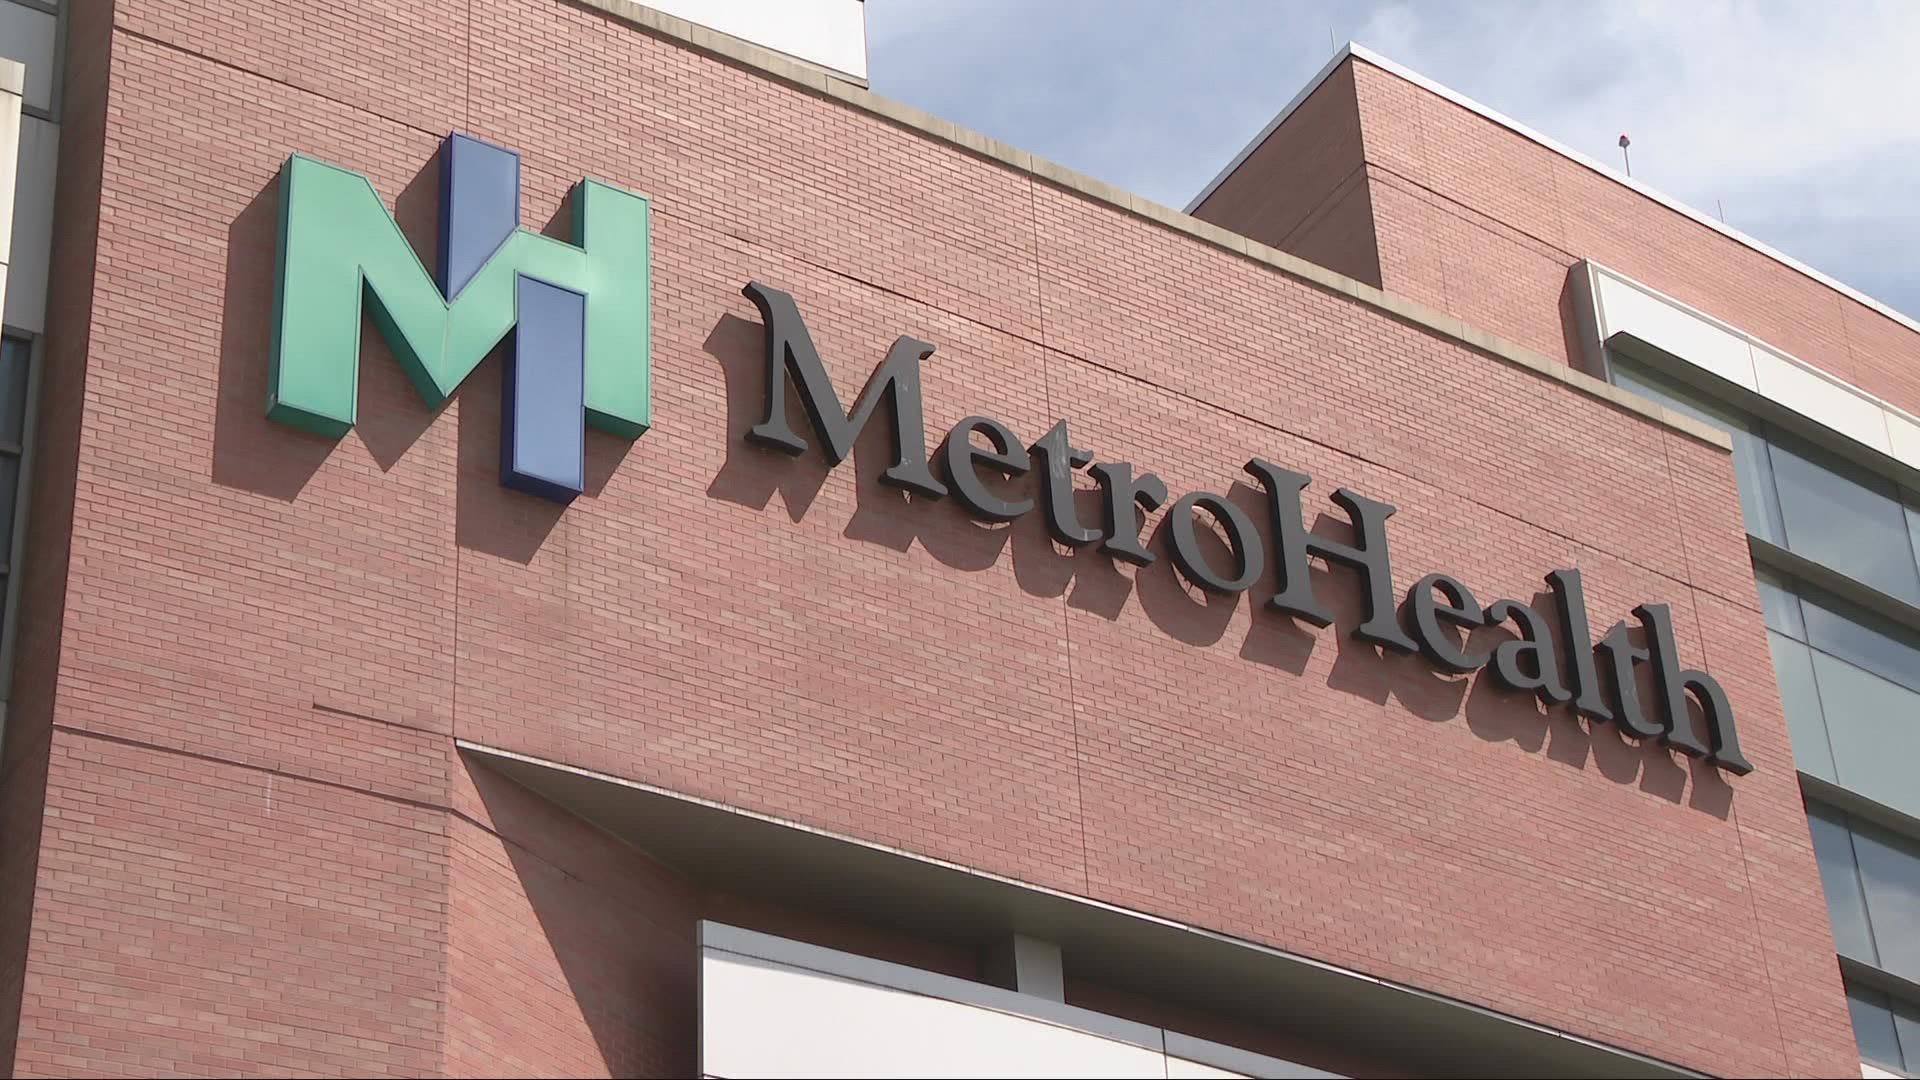 MetroHealth held its first Minority Men's Health Fair on Thursday at three locations across Northeast Ohio.